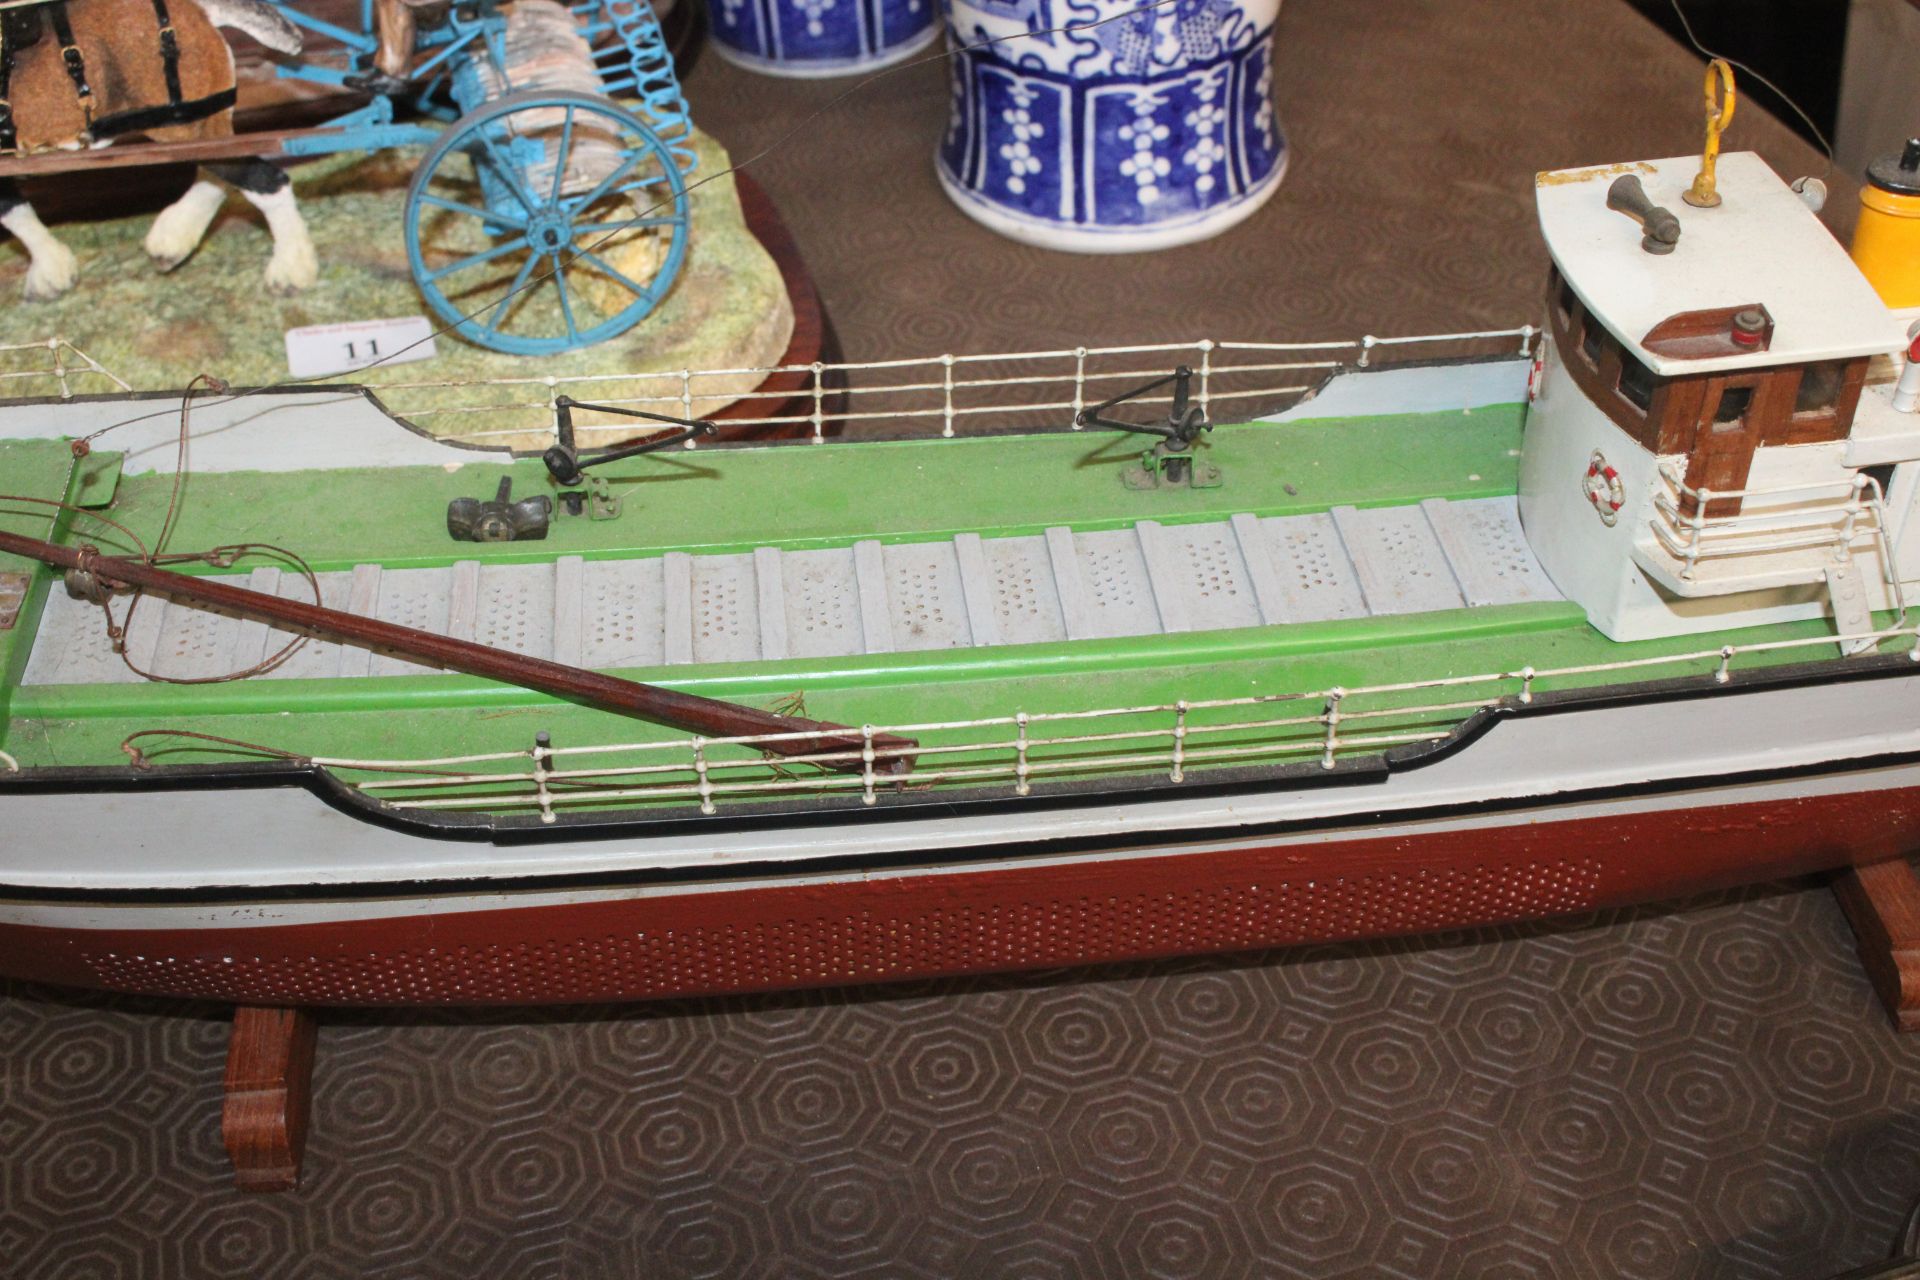 A model of the cargo ship "Peiter Geertruida" - Image 3 of 7